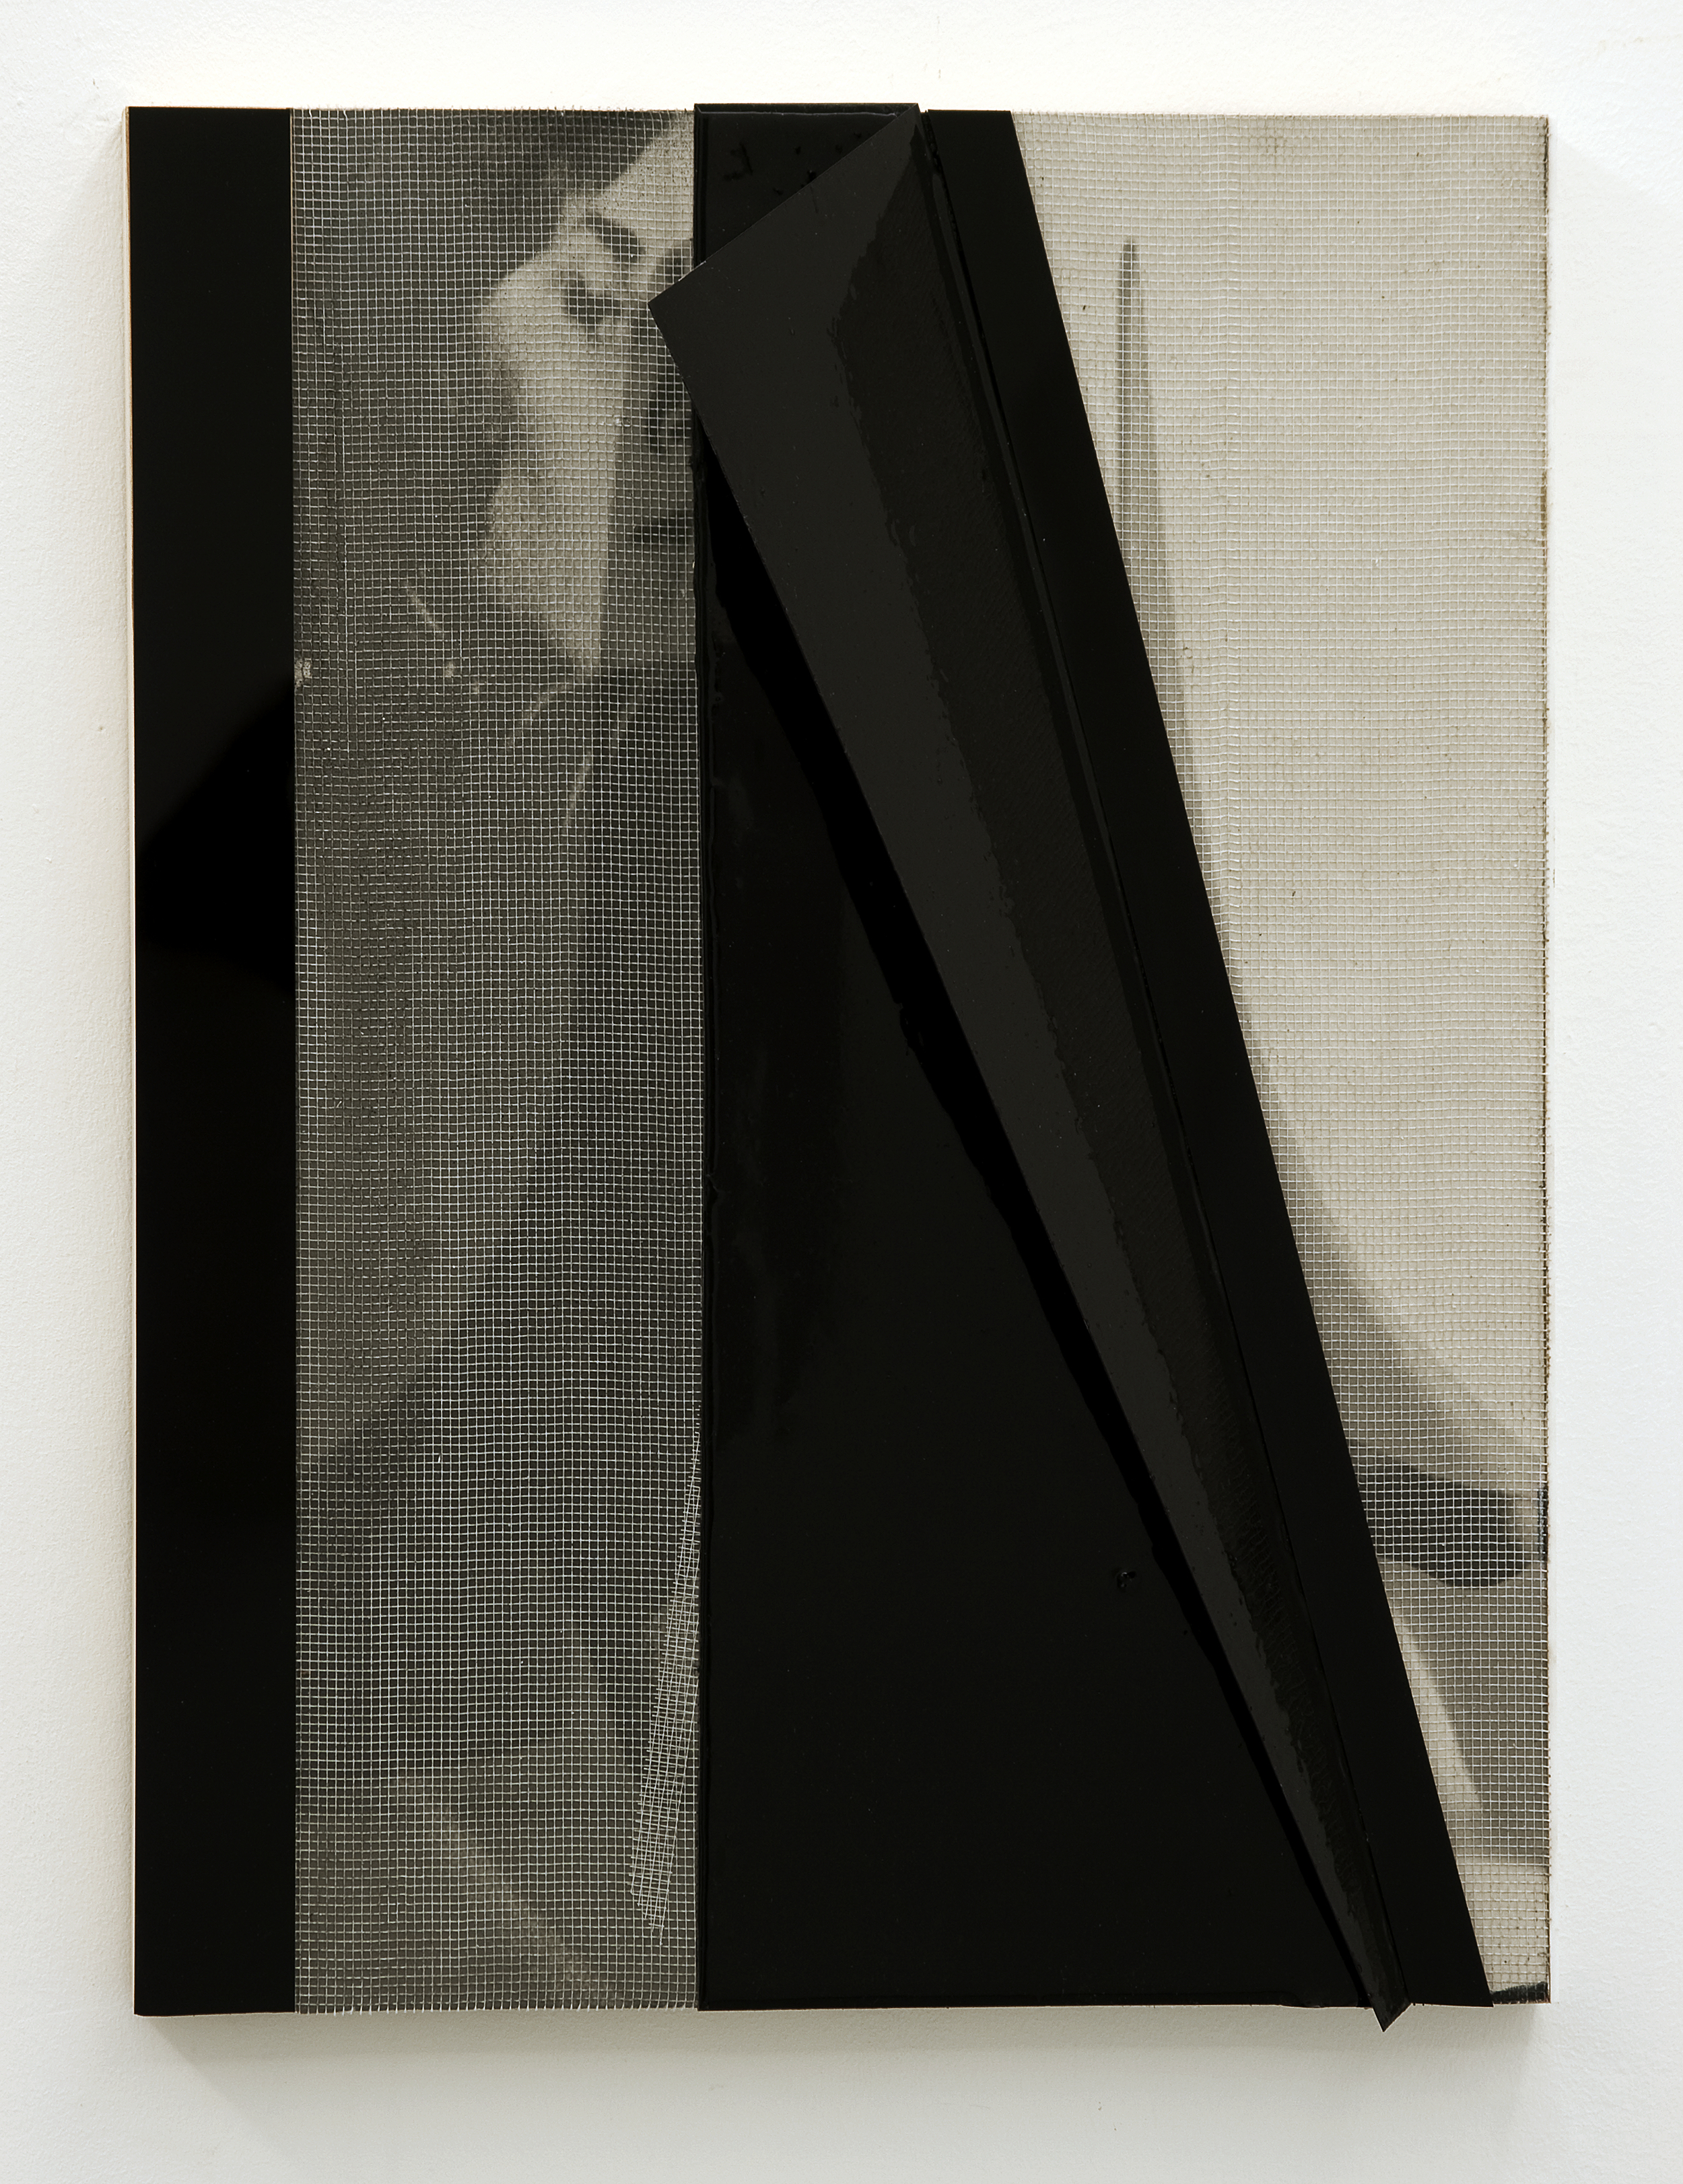   Pablo Jansana © 2012 ,  Fall and fold, Untitled #10 (Adrienne Rich) . Epson Ultrachrome PRO 4880, resin, MDF, plexiglass, fiberglass, aluminum, enamel. 60.5 x 45 x 15.5 cm. Courtesy of the artist. 